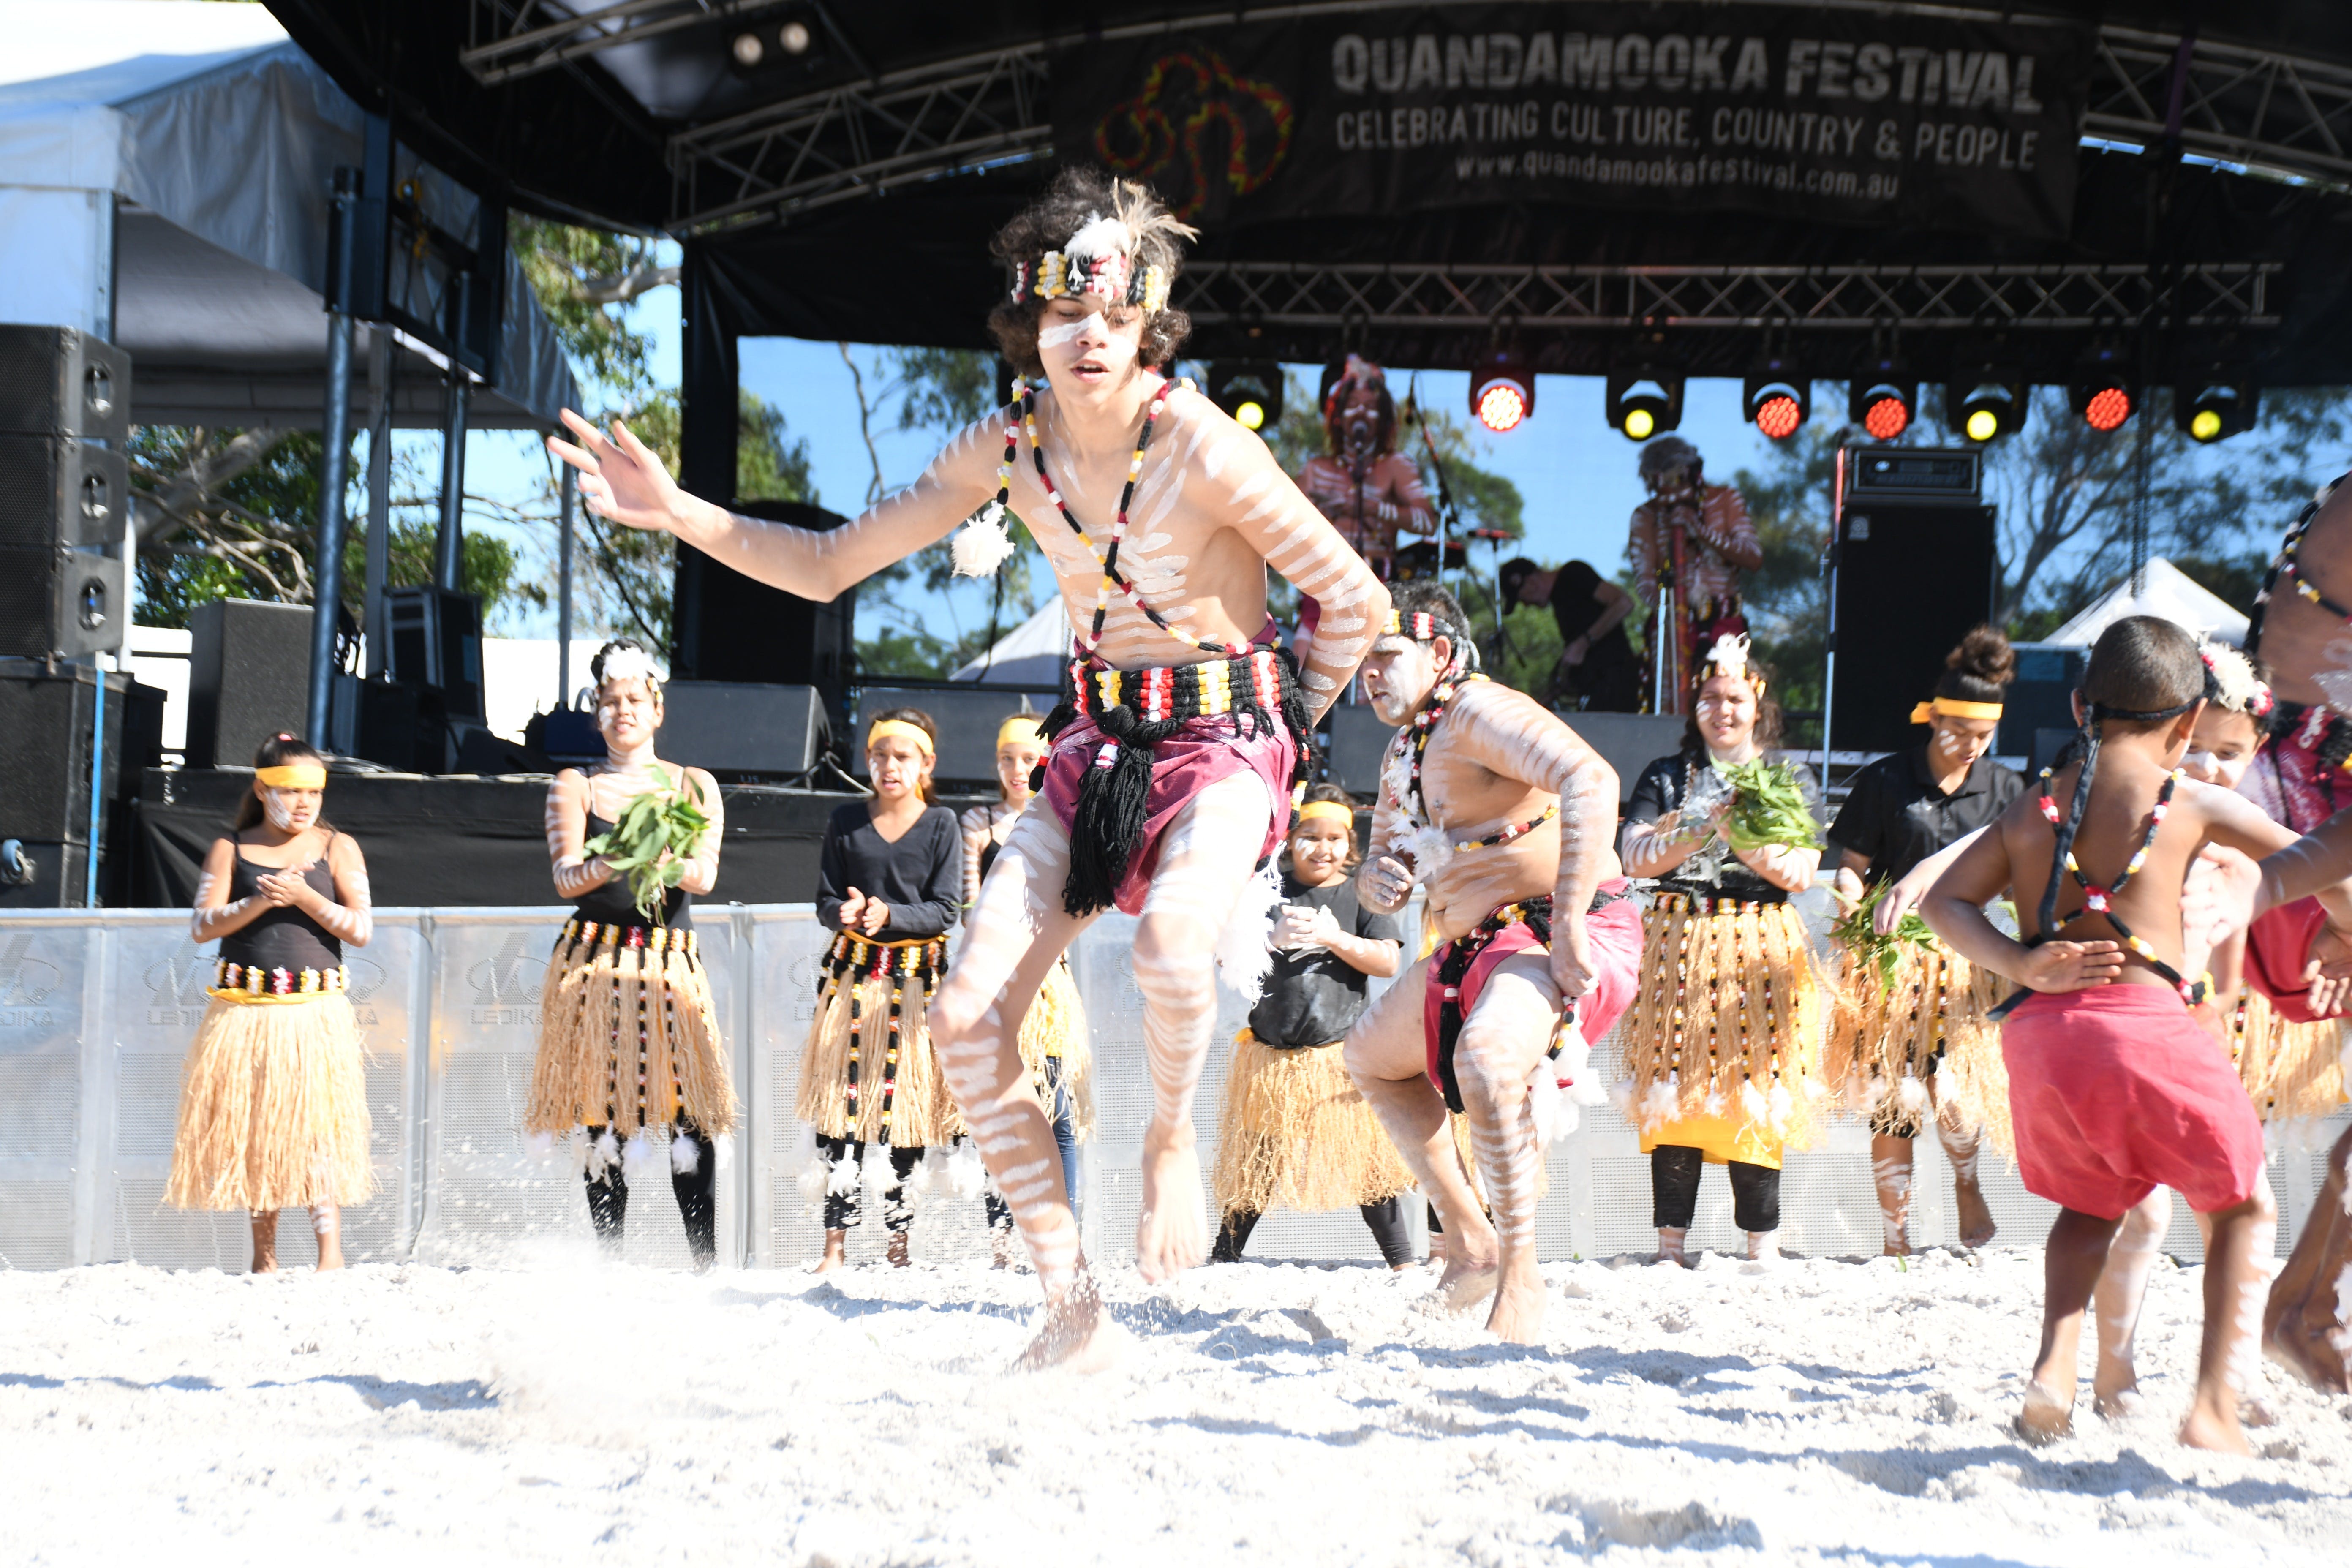 Quandamooka Festival 2021 - Melbourne Tourism